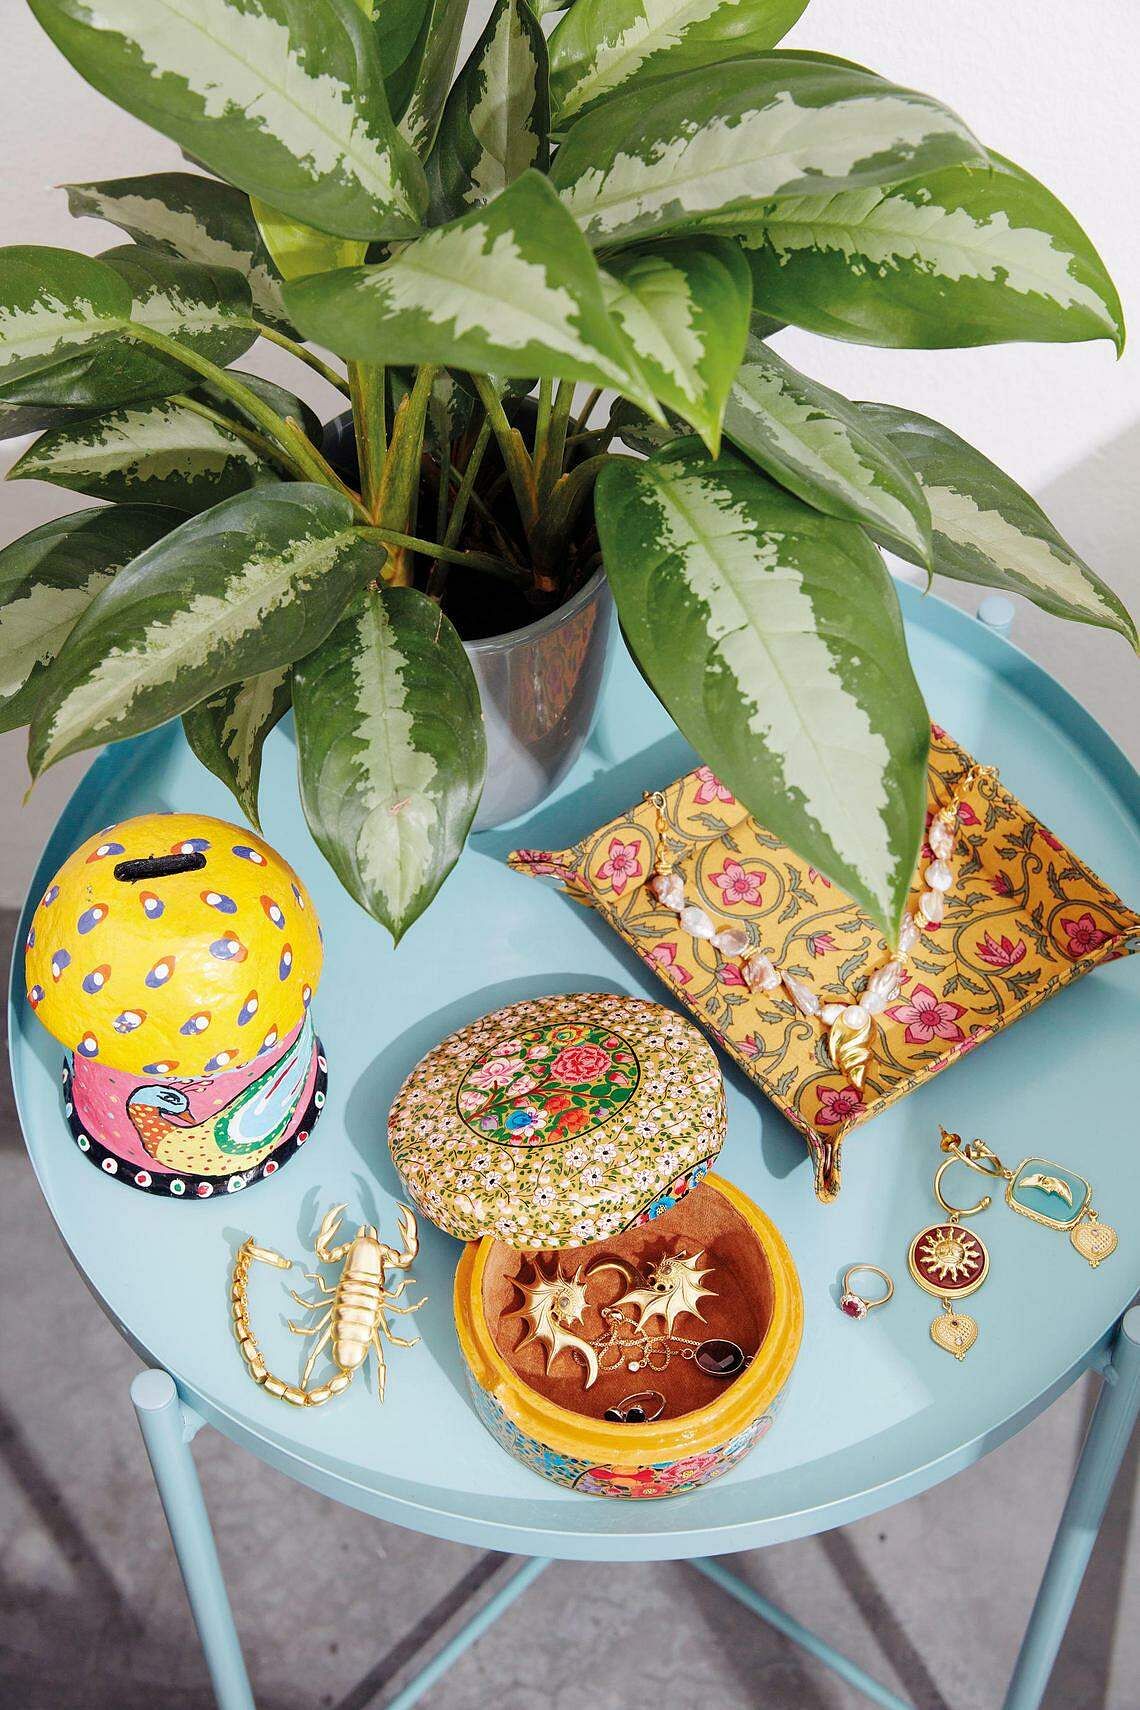 hidden treasures in home of olio jewellery brand co-owner aashna singh